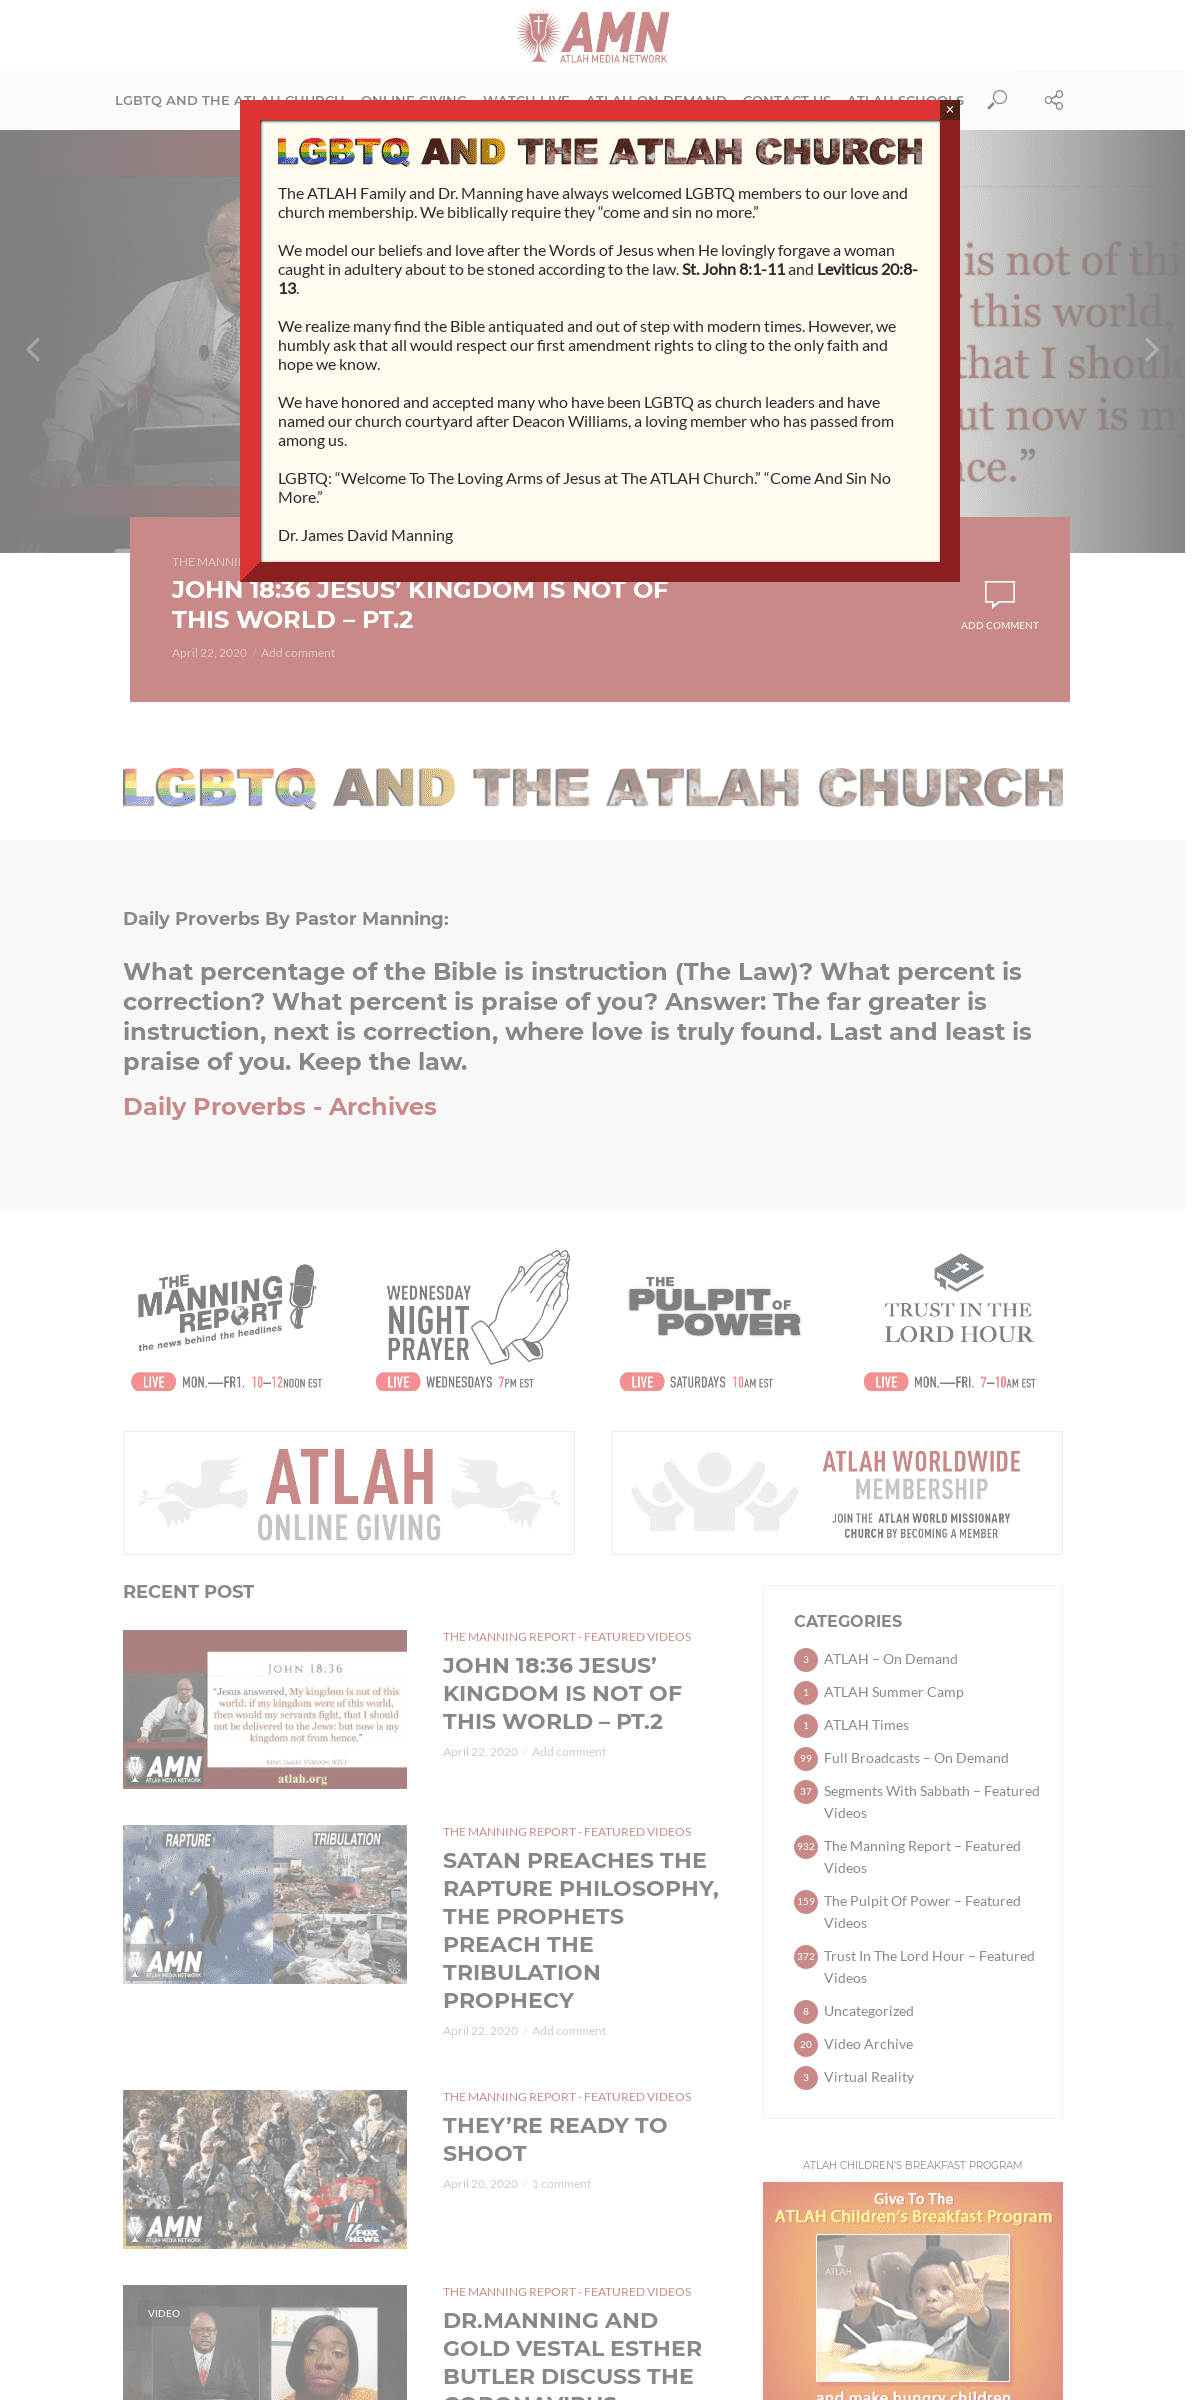 A complete backup of atlah.org